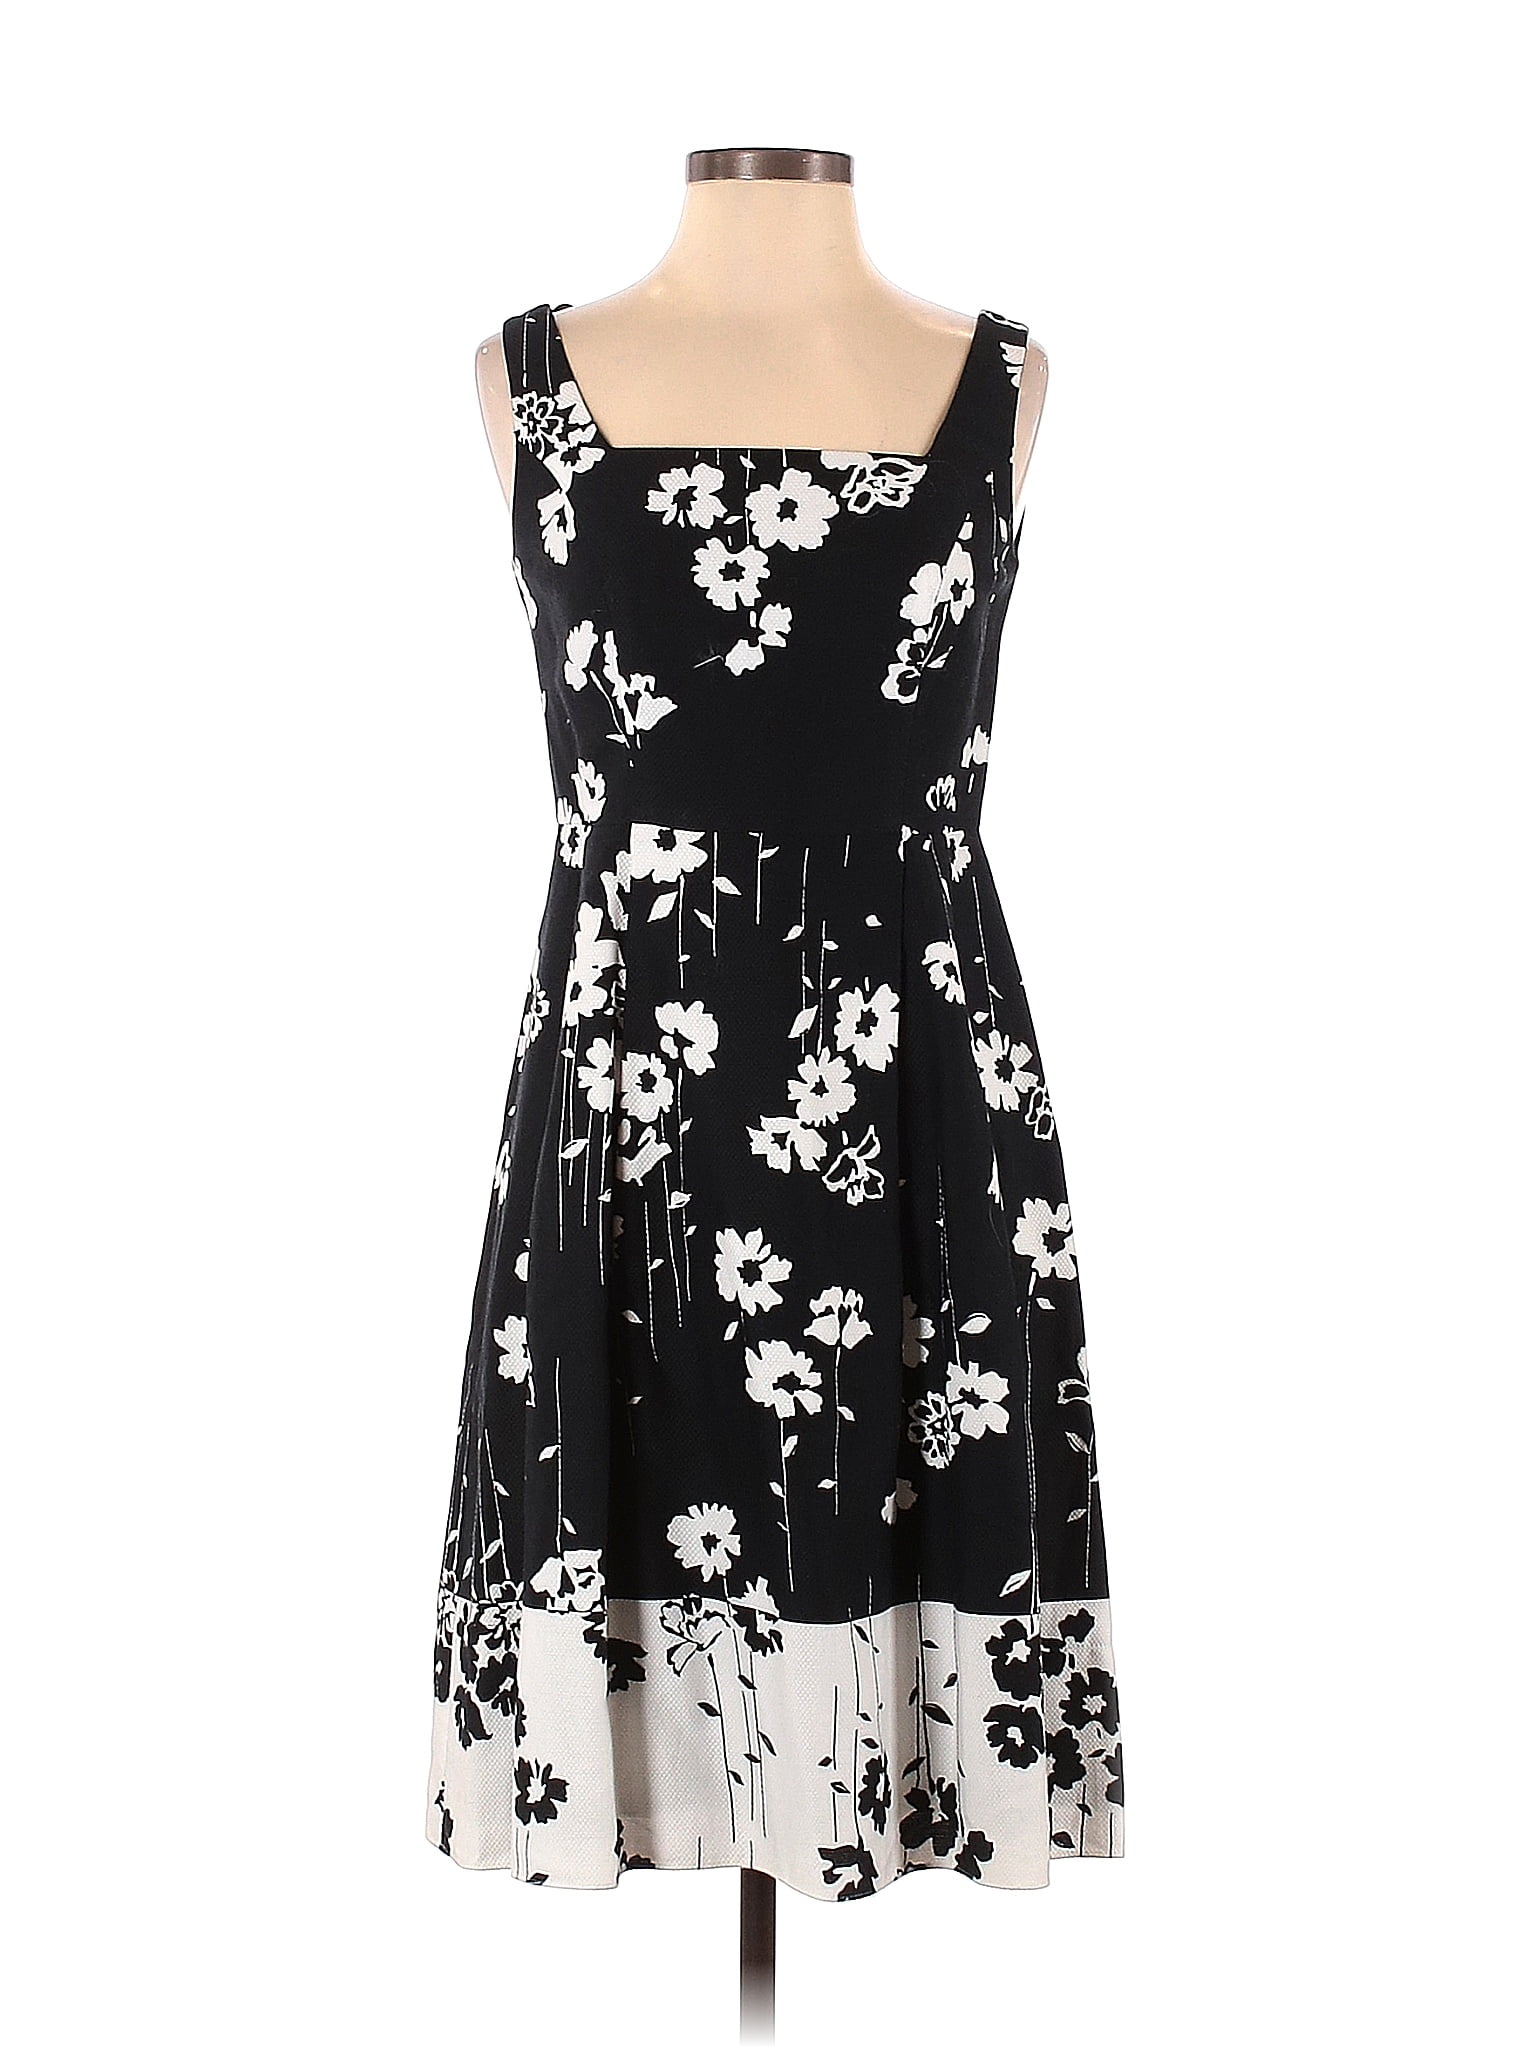 Talbots 100% Cotton Black Casual Dress Size 2 (Petite) - 79% off | thredUP